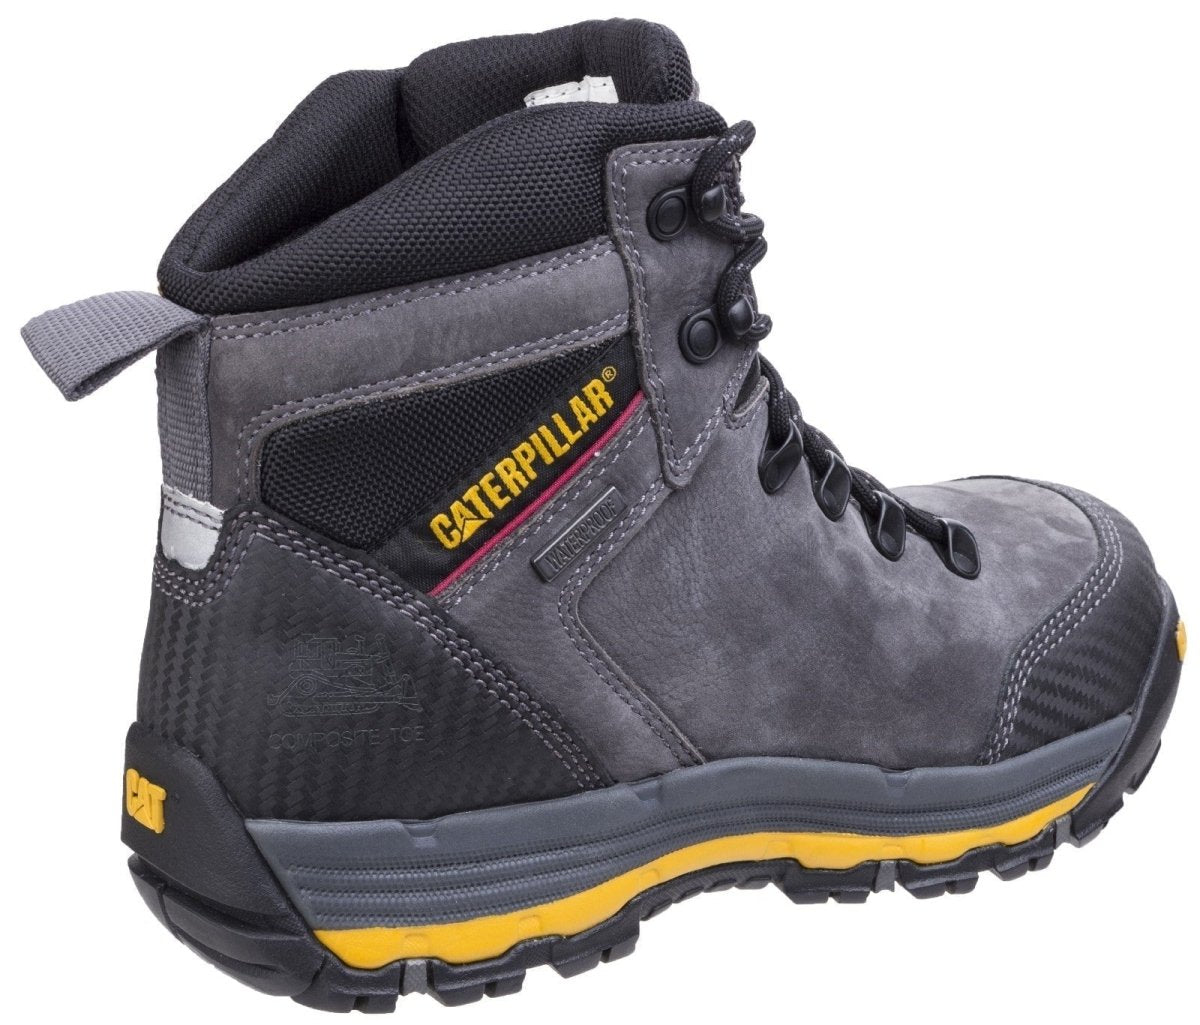 Caterpillar Munising Safety Boots - Shoe Store Direct